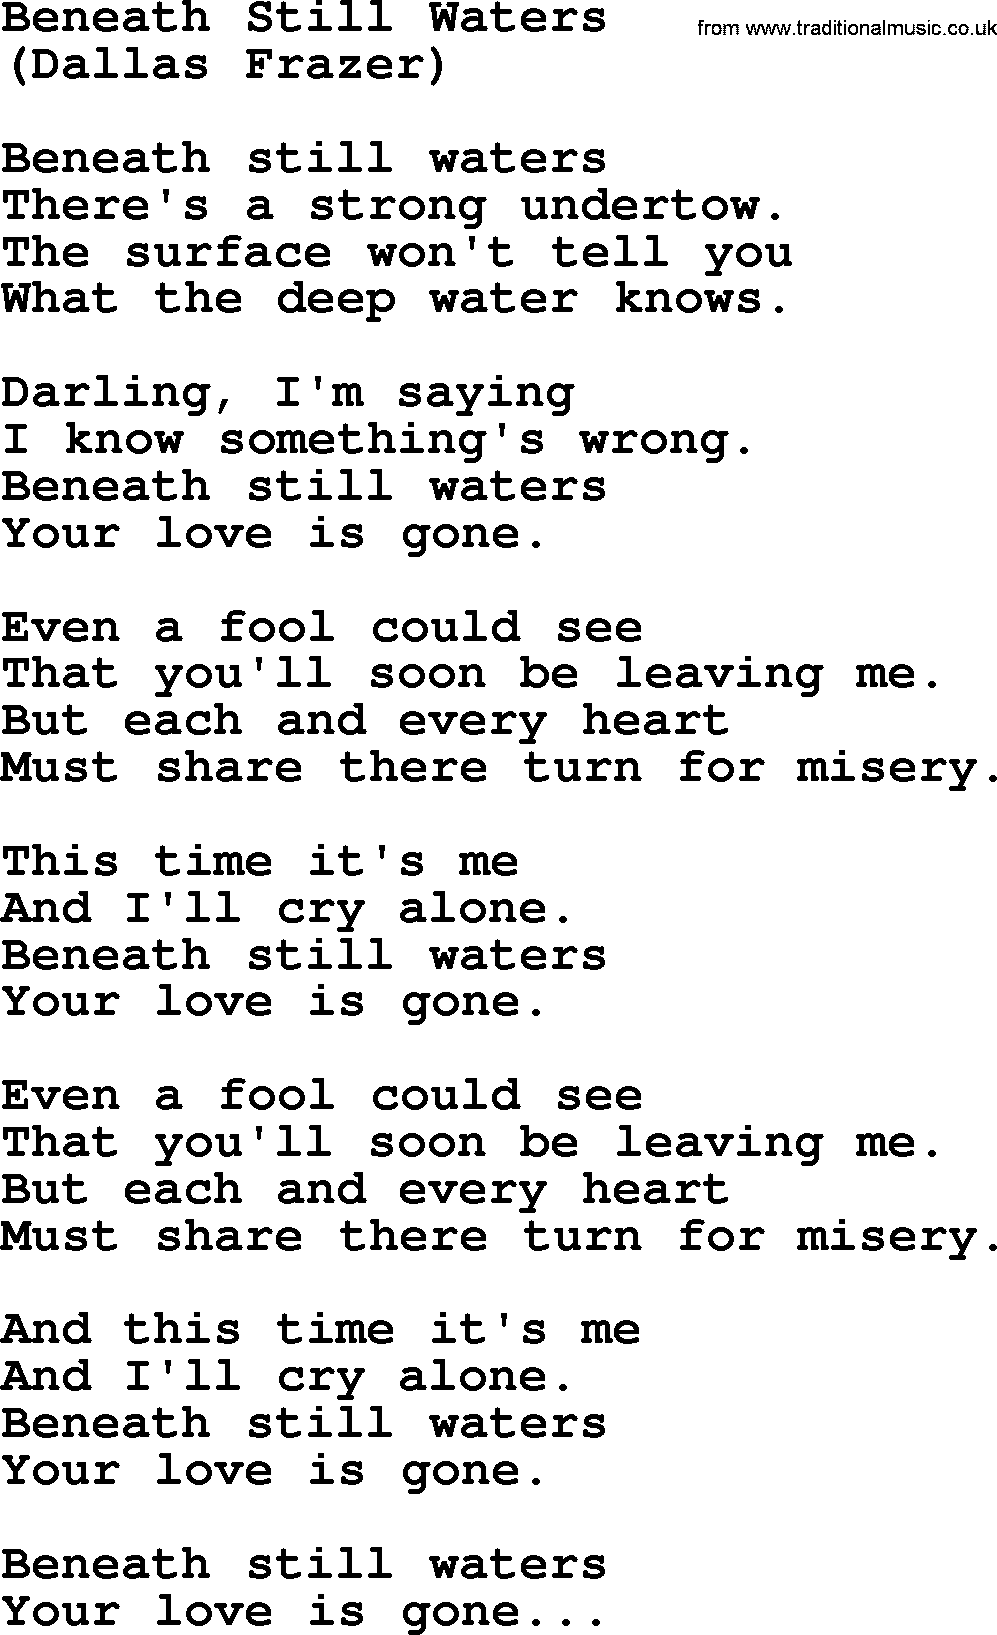 George Jones song: Beneath Still Waters, lyrics